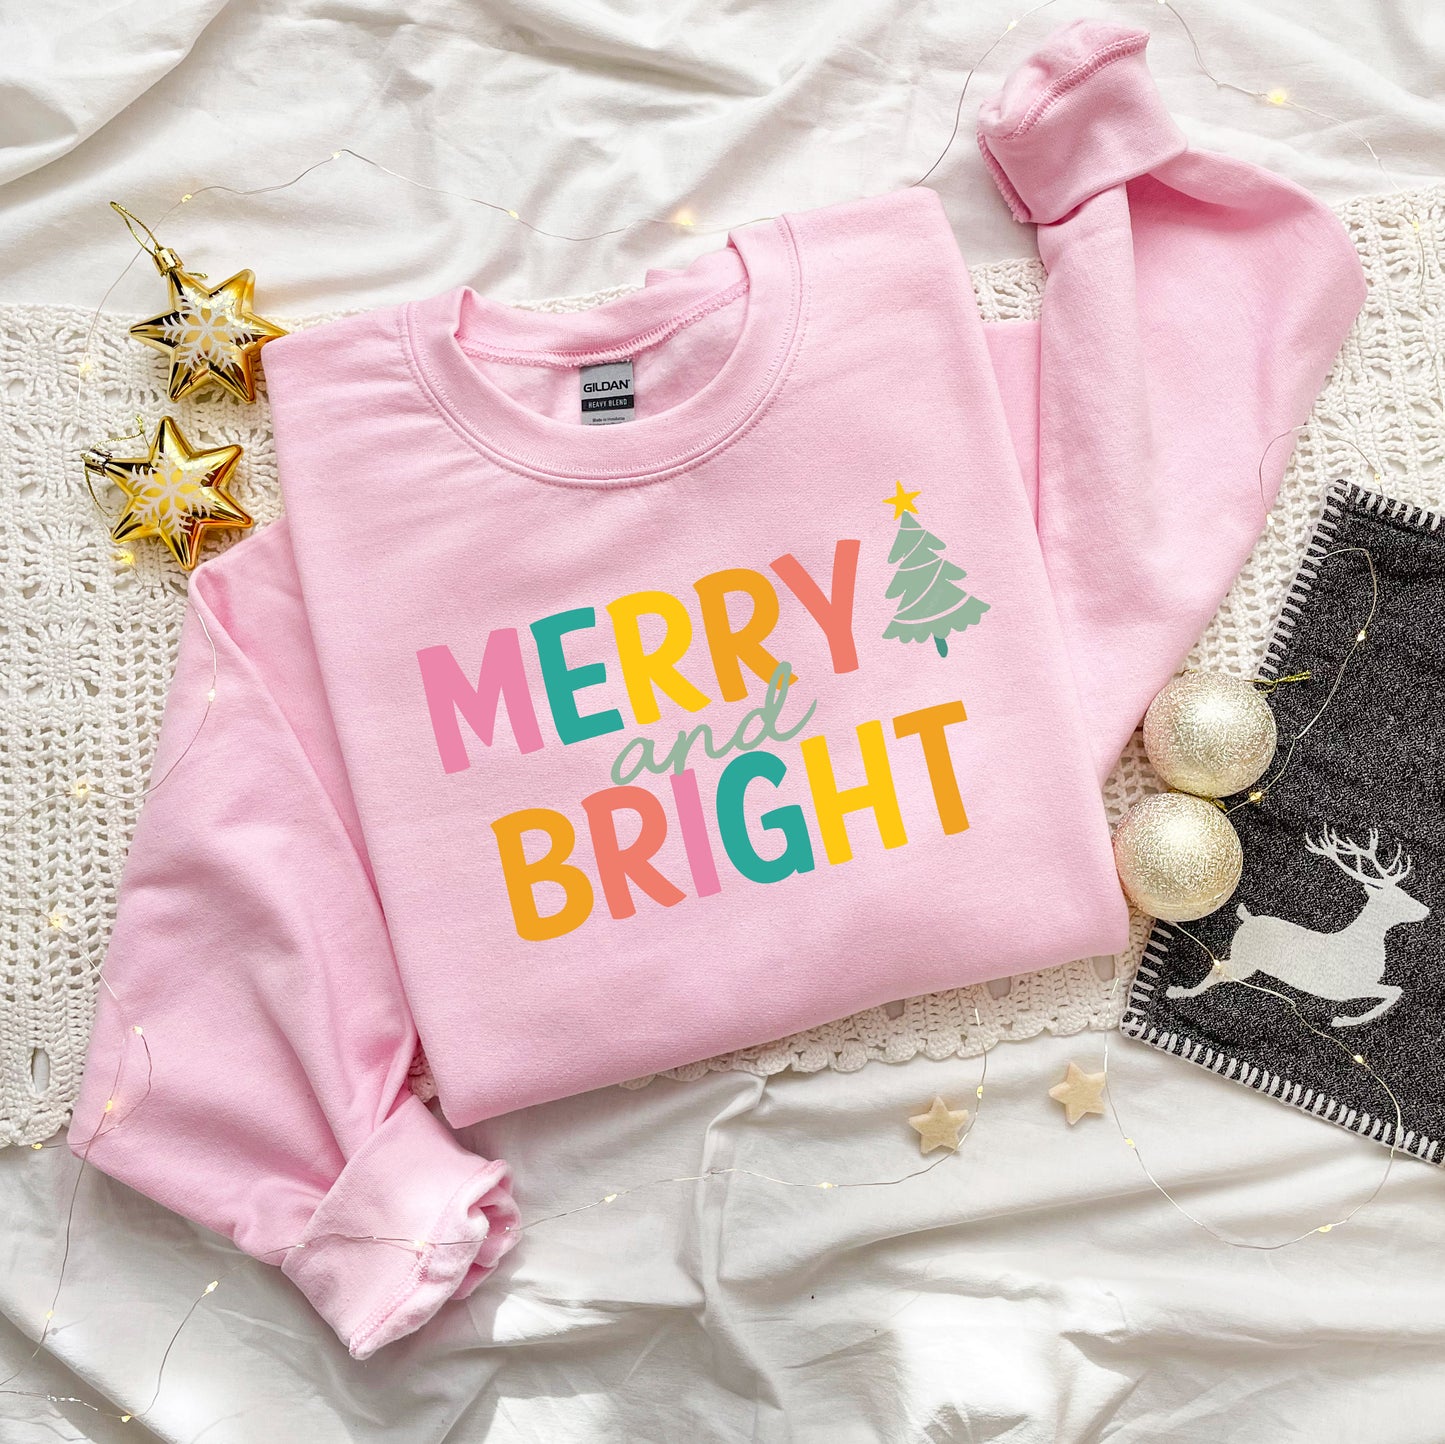 Merry and Bright Crewneck